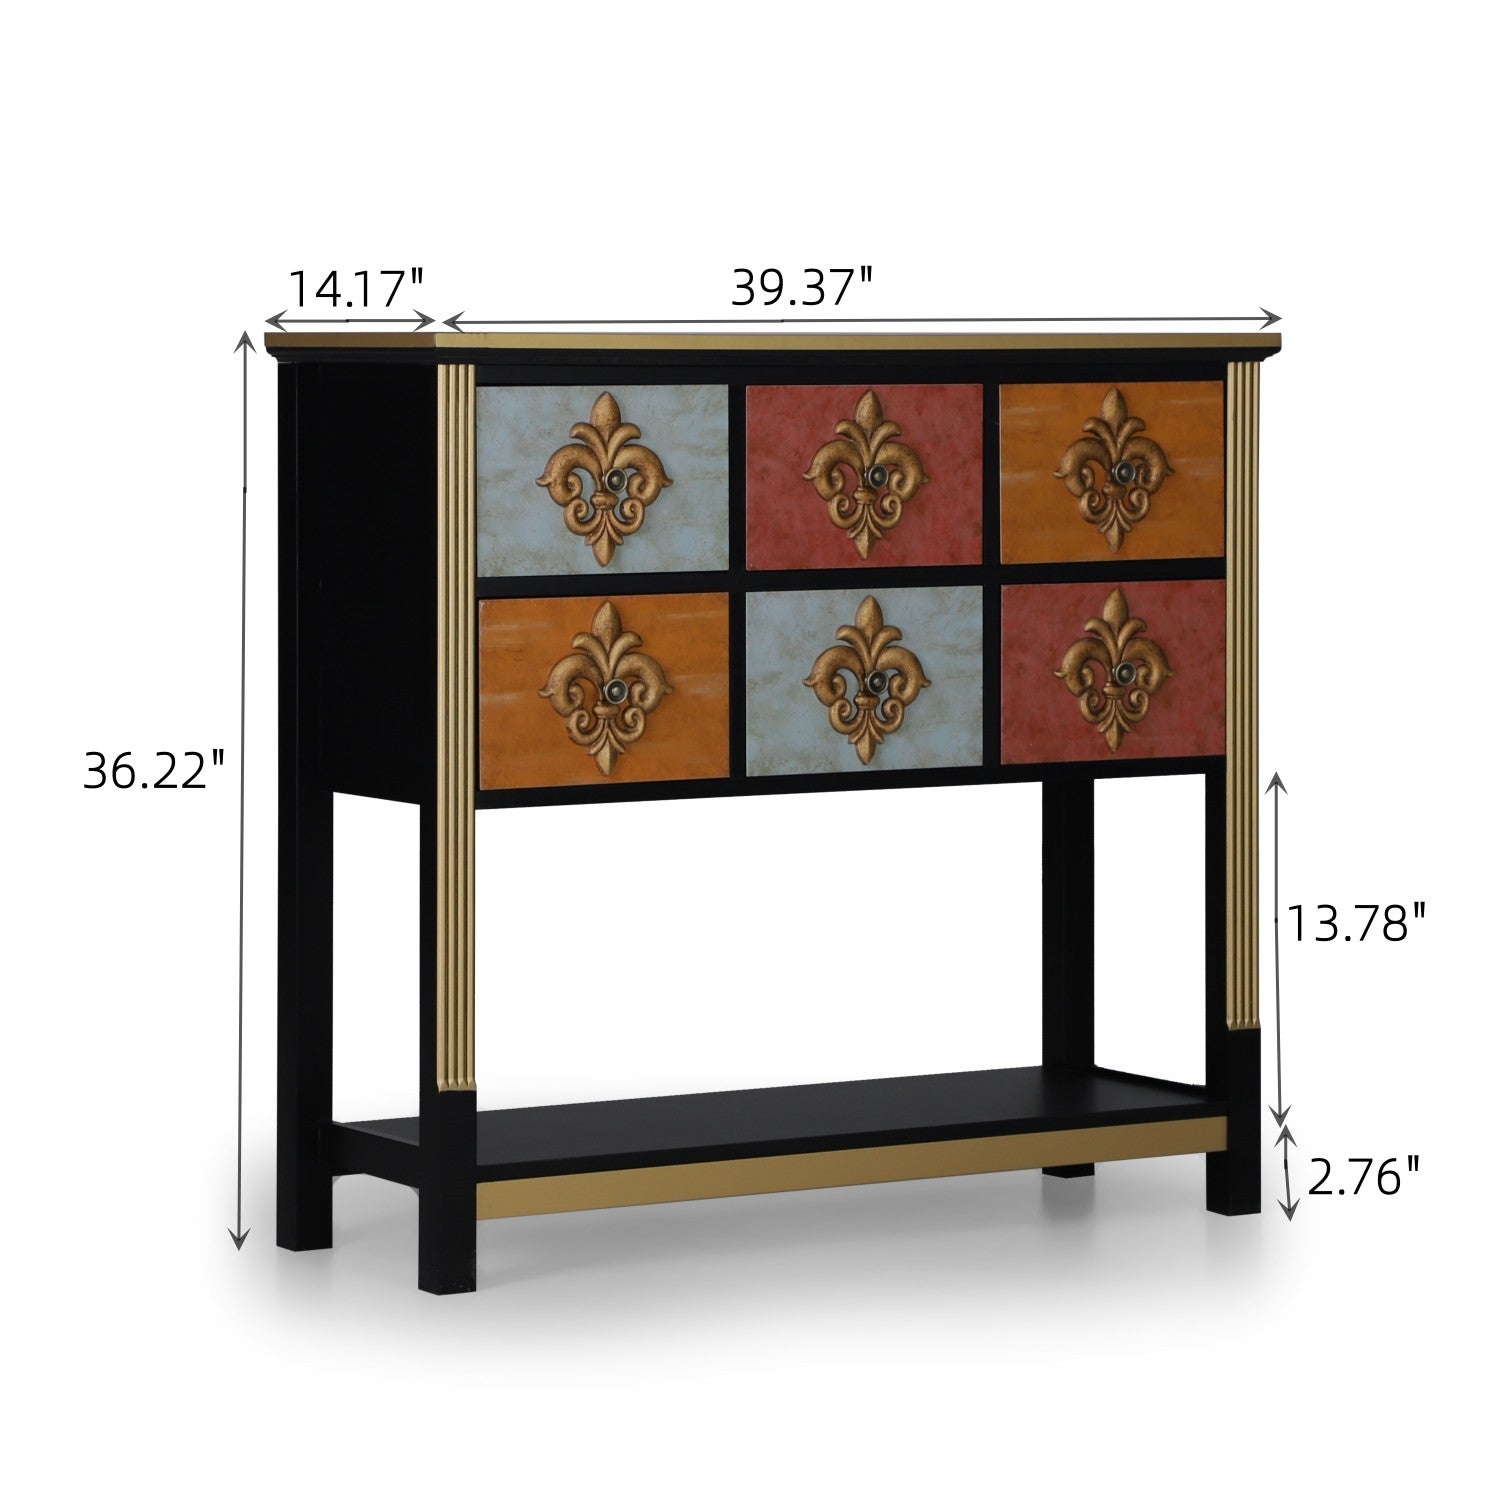 6-Drawer Royal Flower Console Table with Bottom Shelf -MFSTUDIO